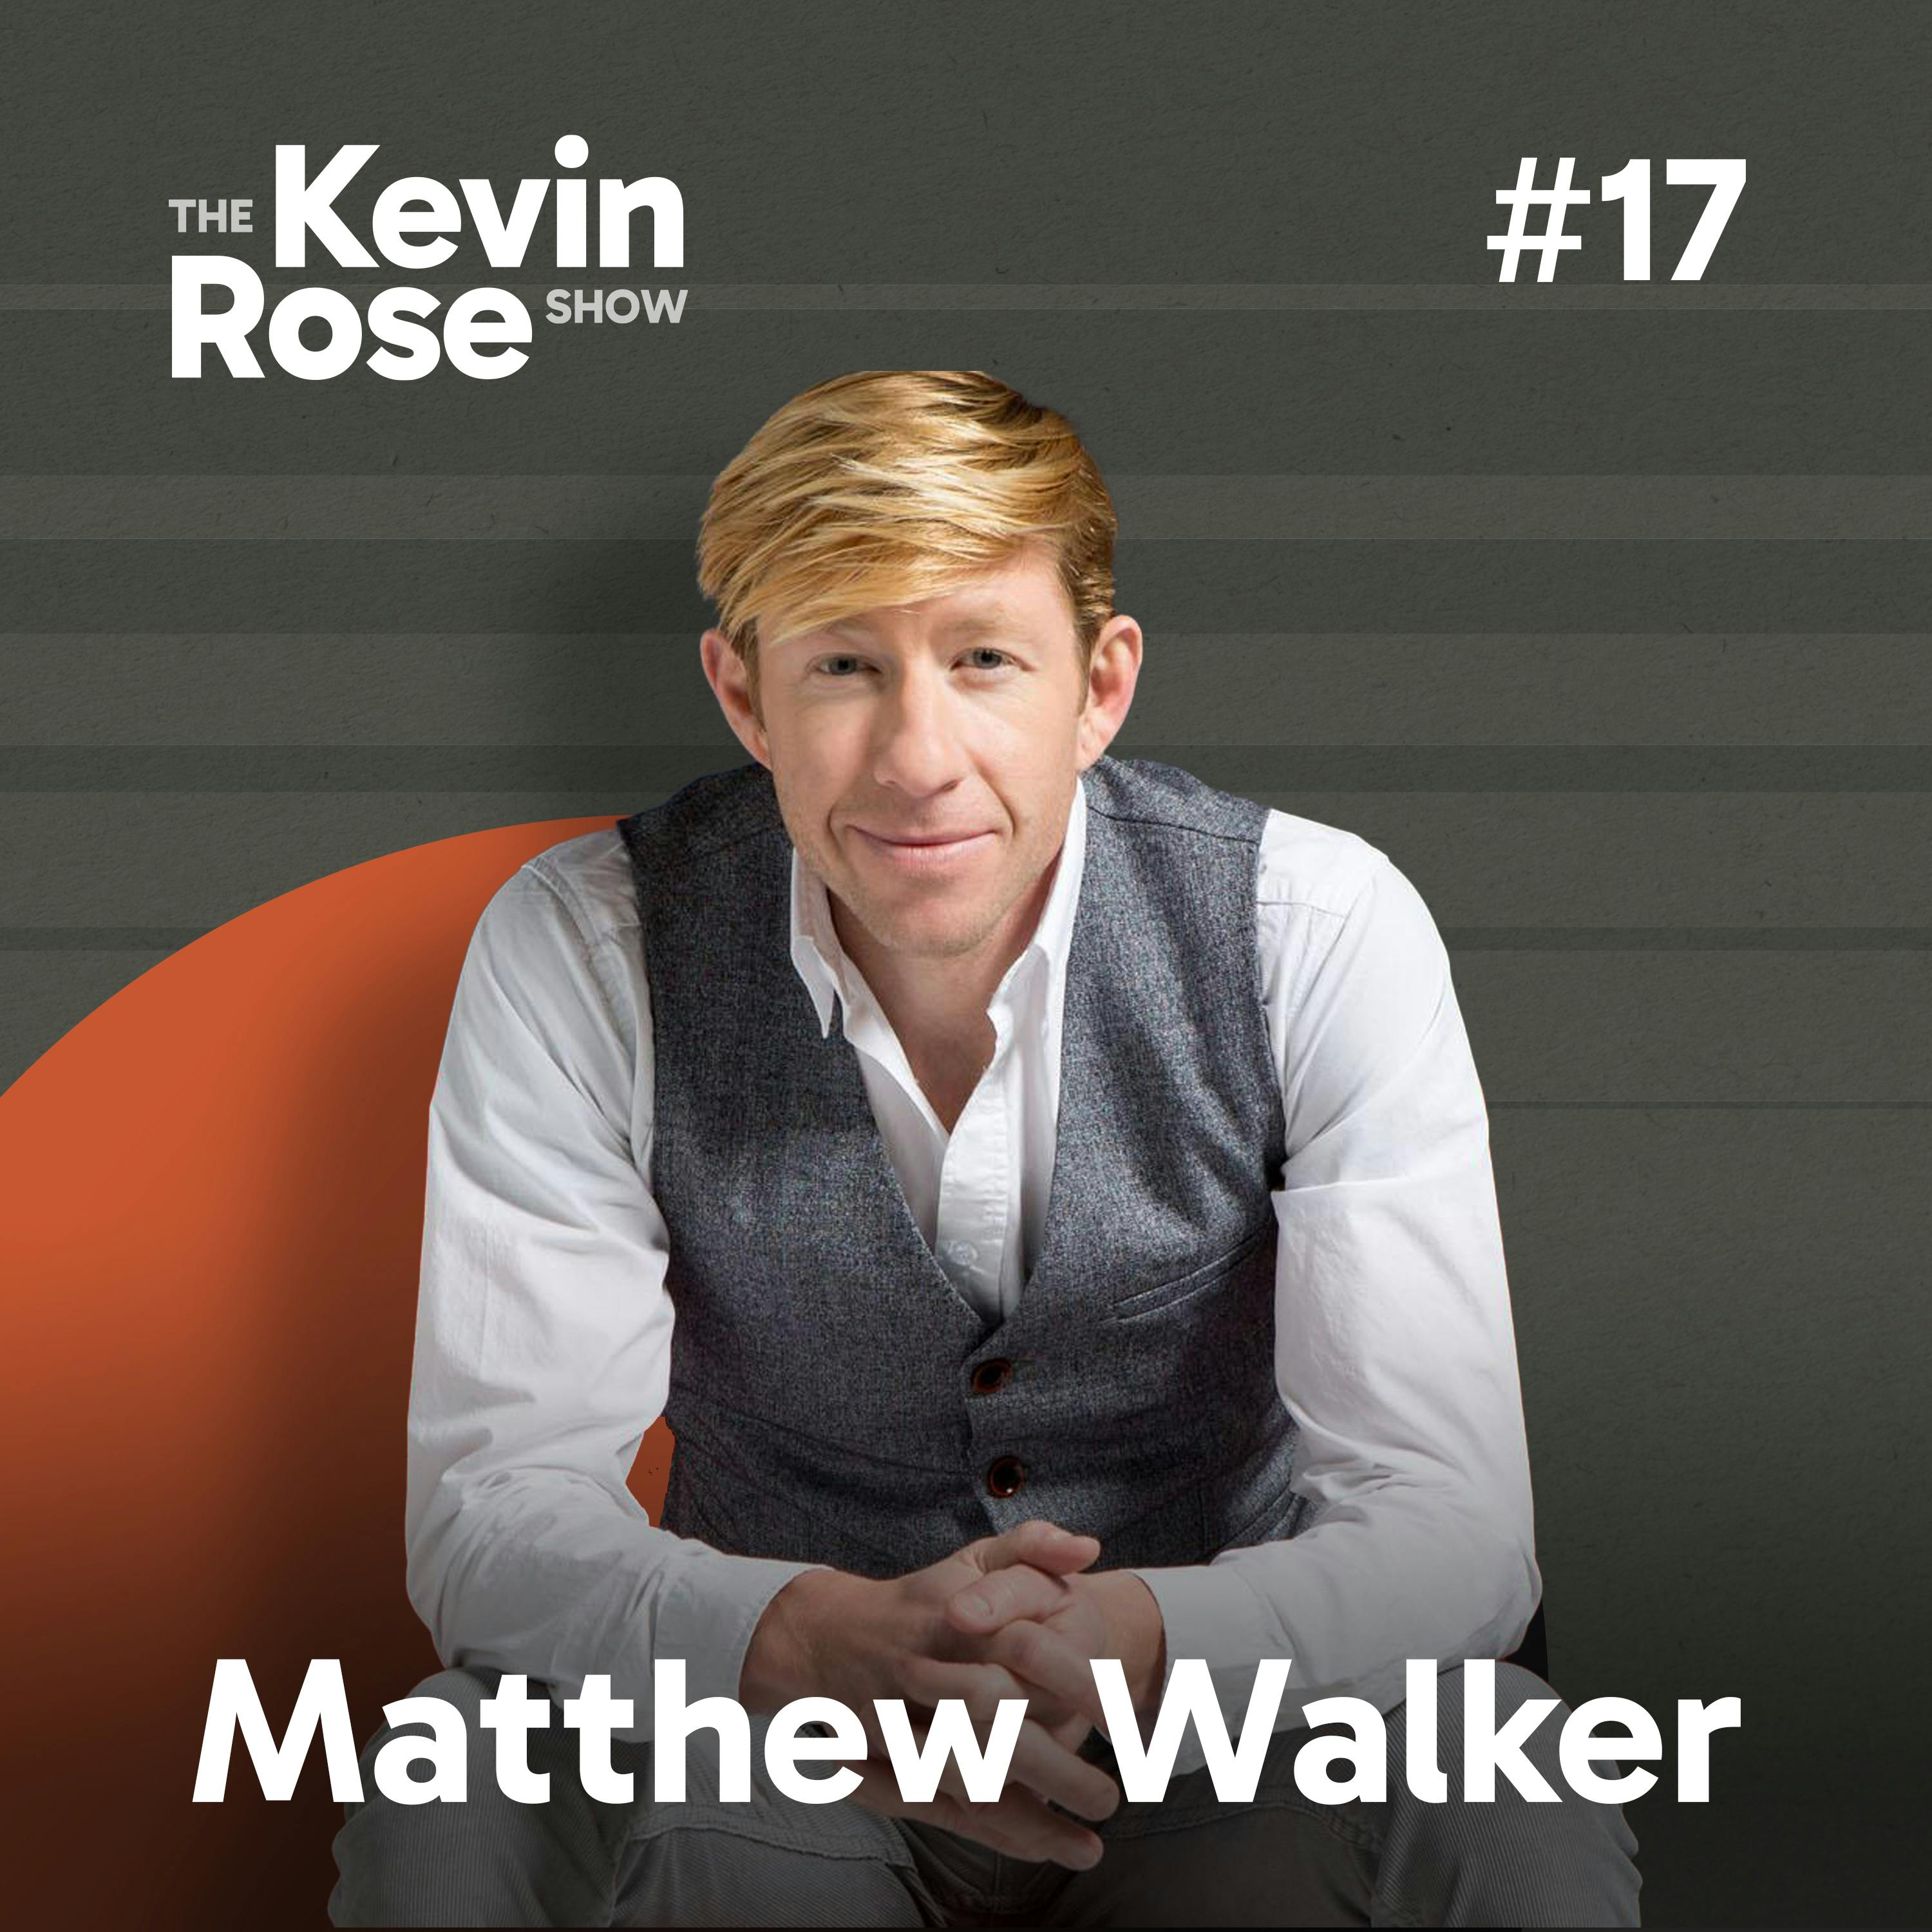 Matthew Walker Ph.D, Author of ”Why We Sleep: Unlocking the Power of Sleep and Dreams” (#17)